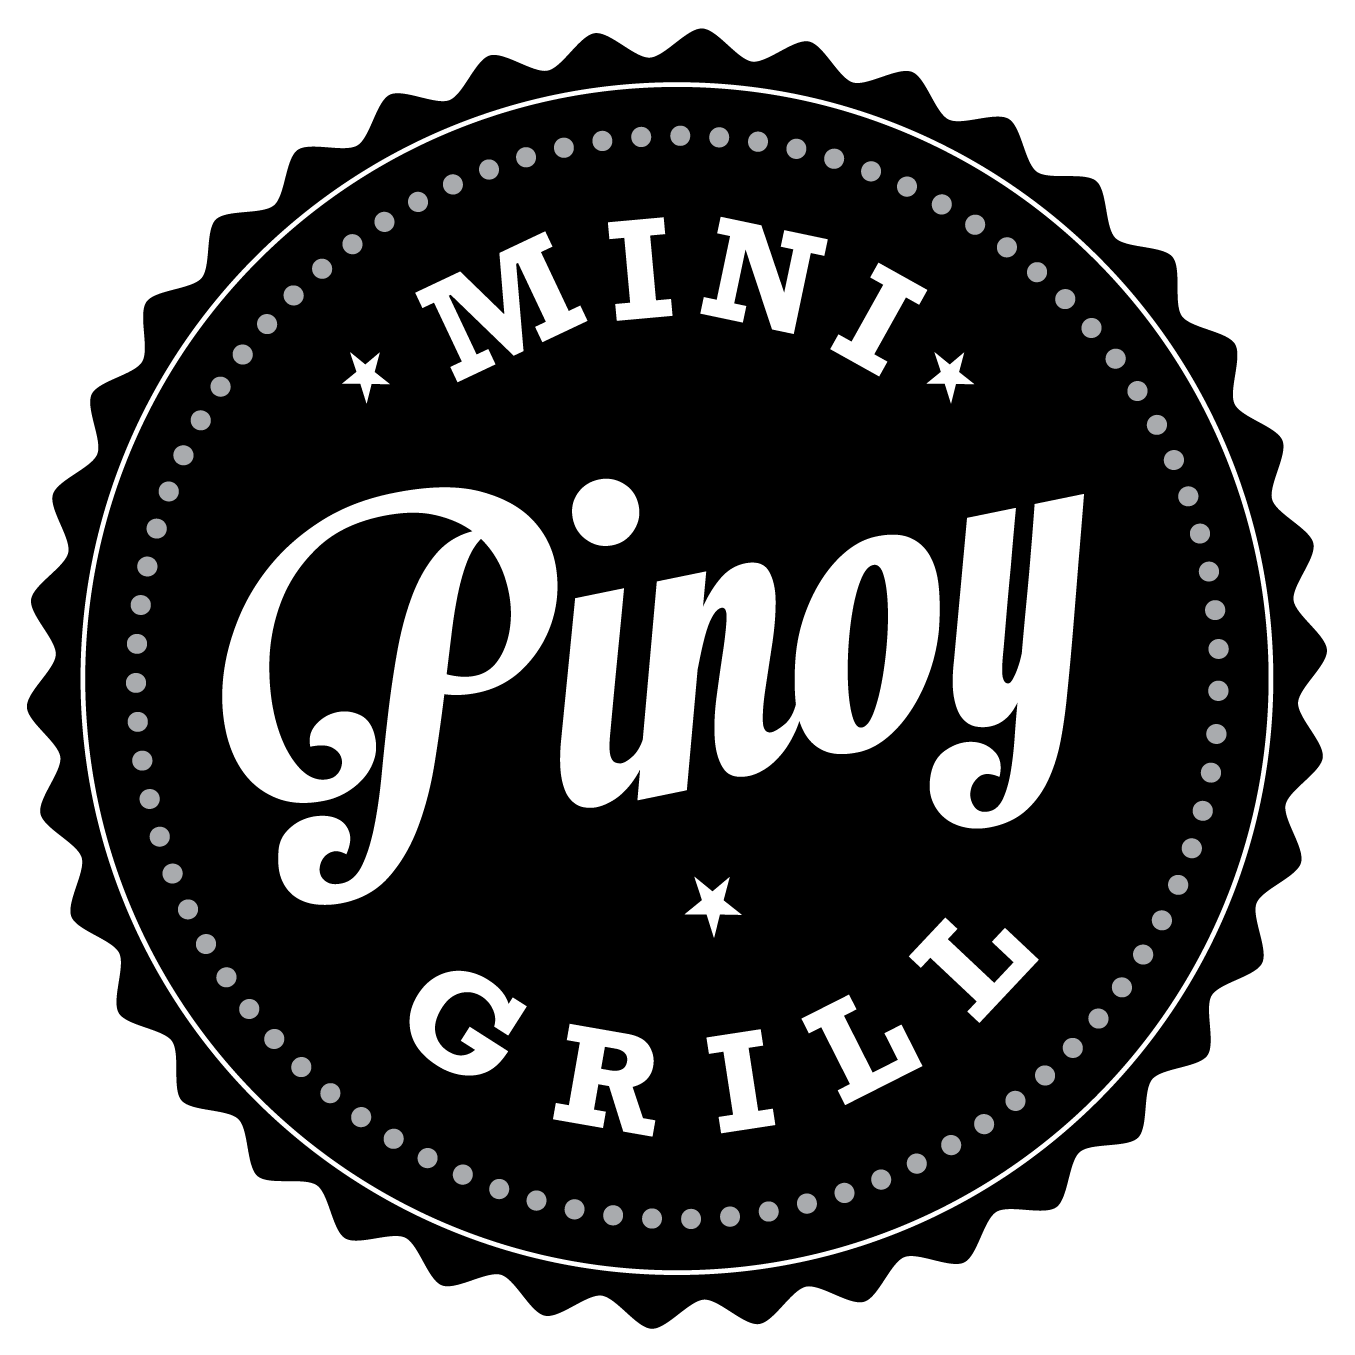 Mini Pinoy Grill